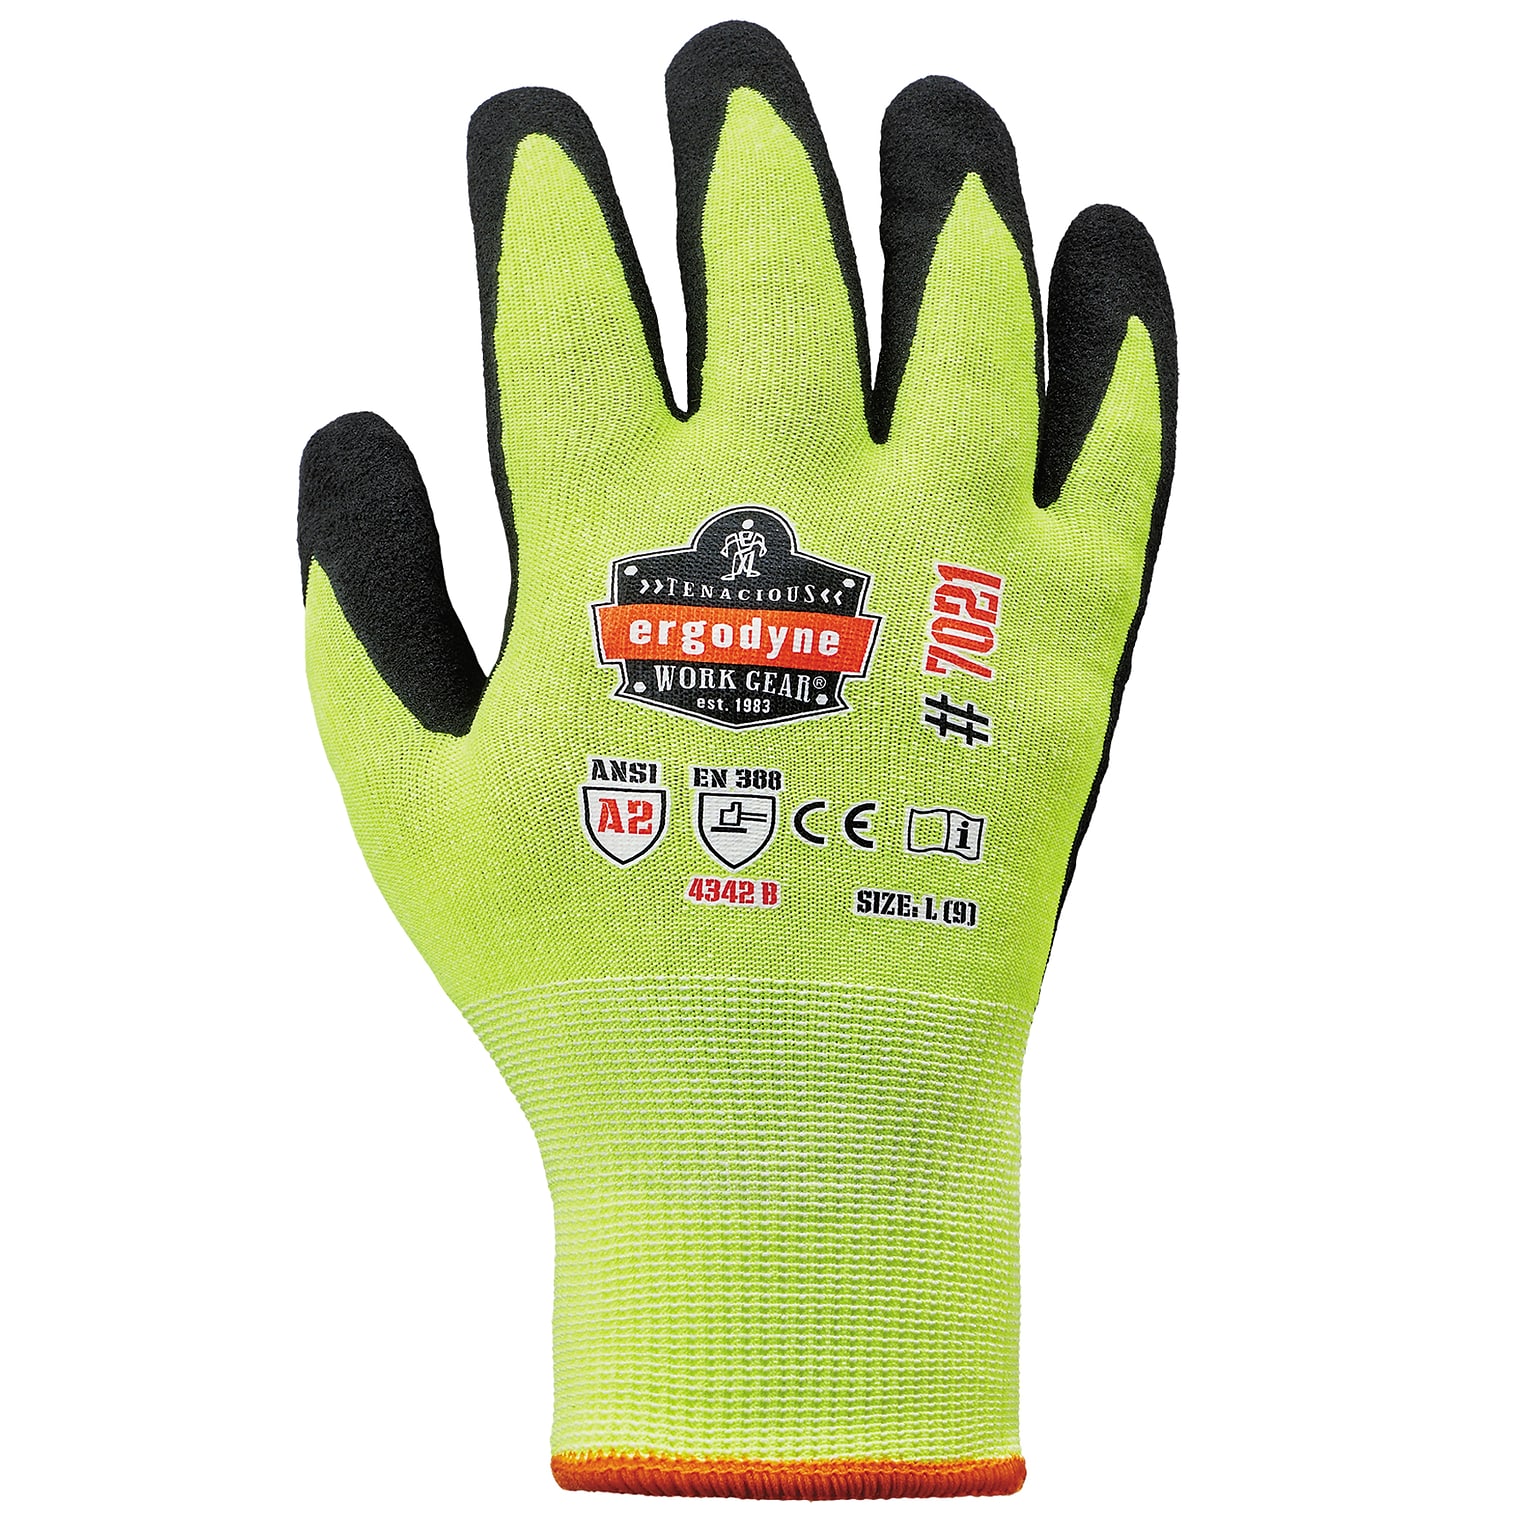 Ergodyne ProFlex 7021 Hi-Vis Nitrile Coated Cut-Resistant Gloves, ANSI A2, Wet Grip, Lime, Large, 144 Pairs (17964)